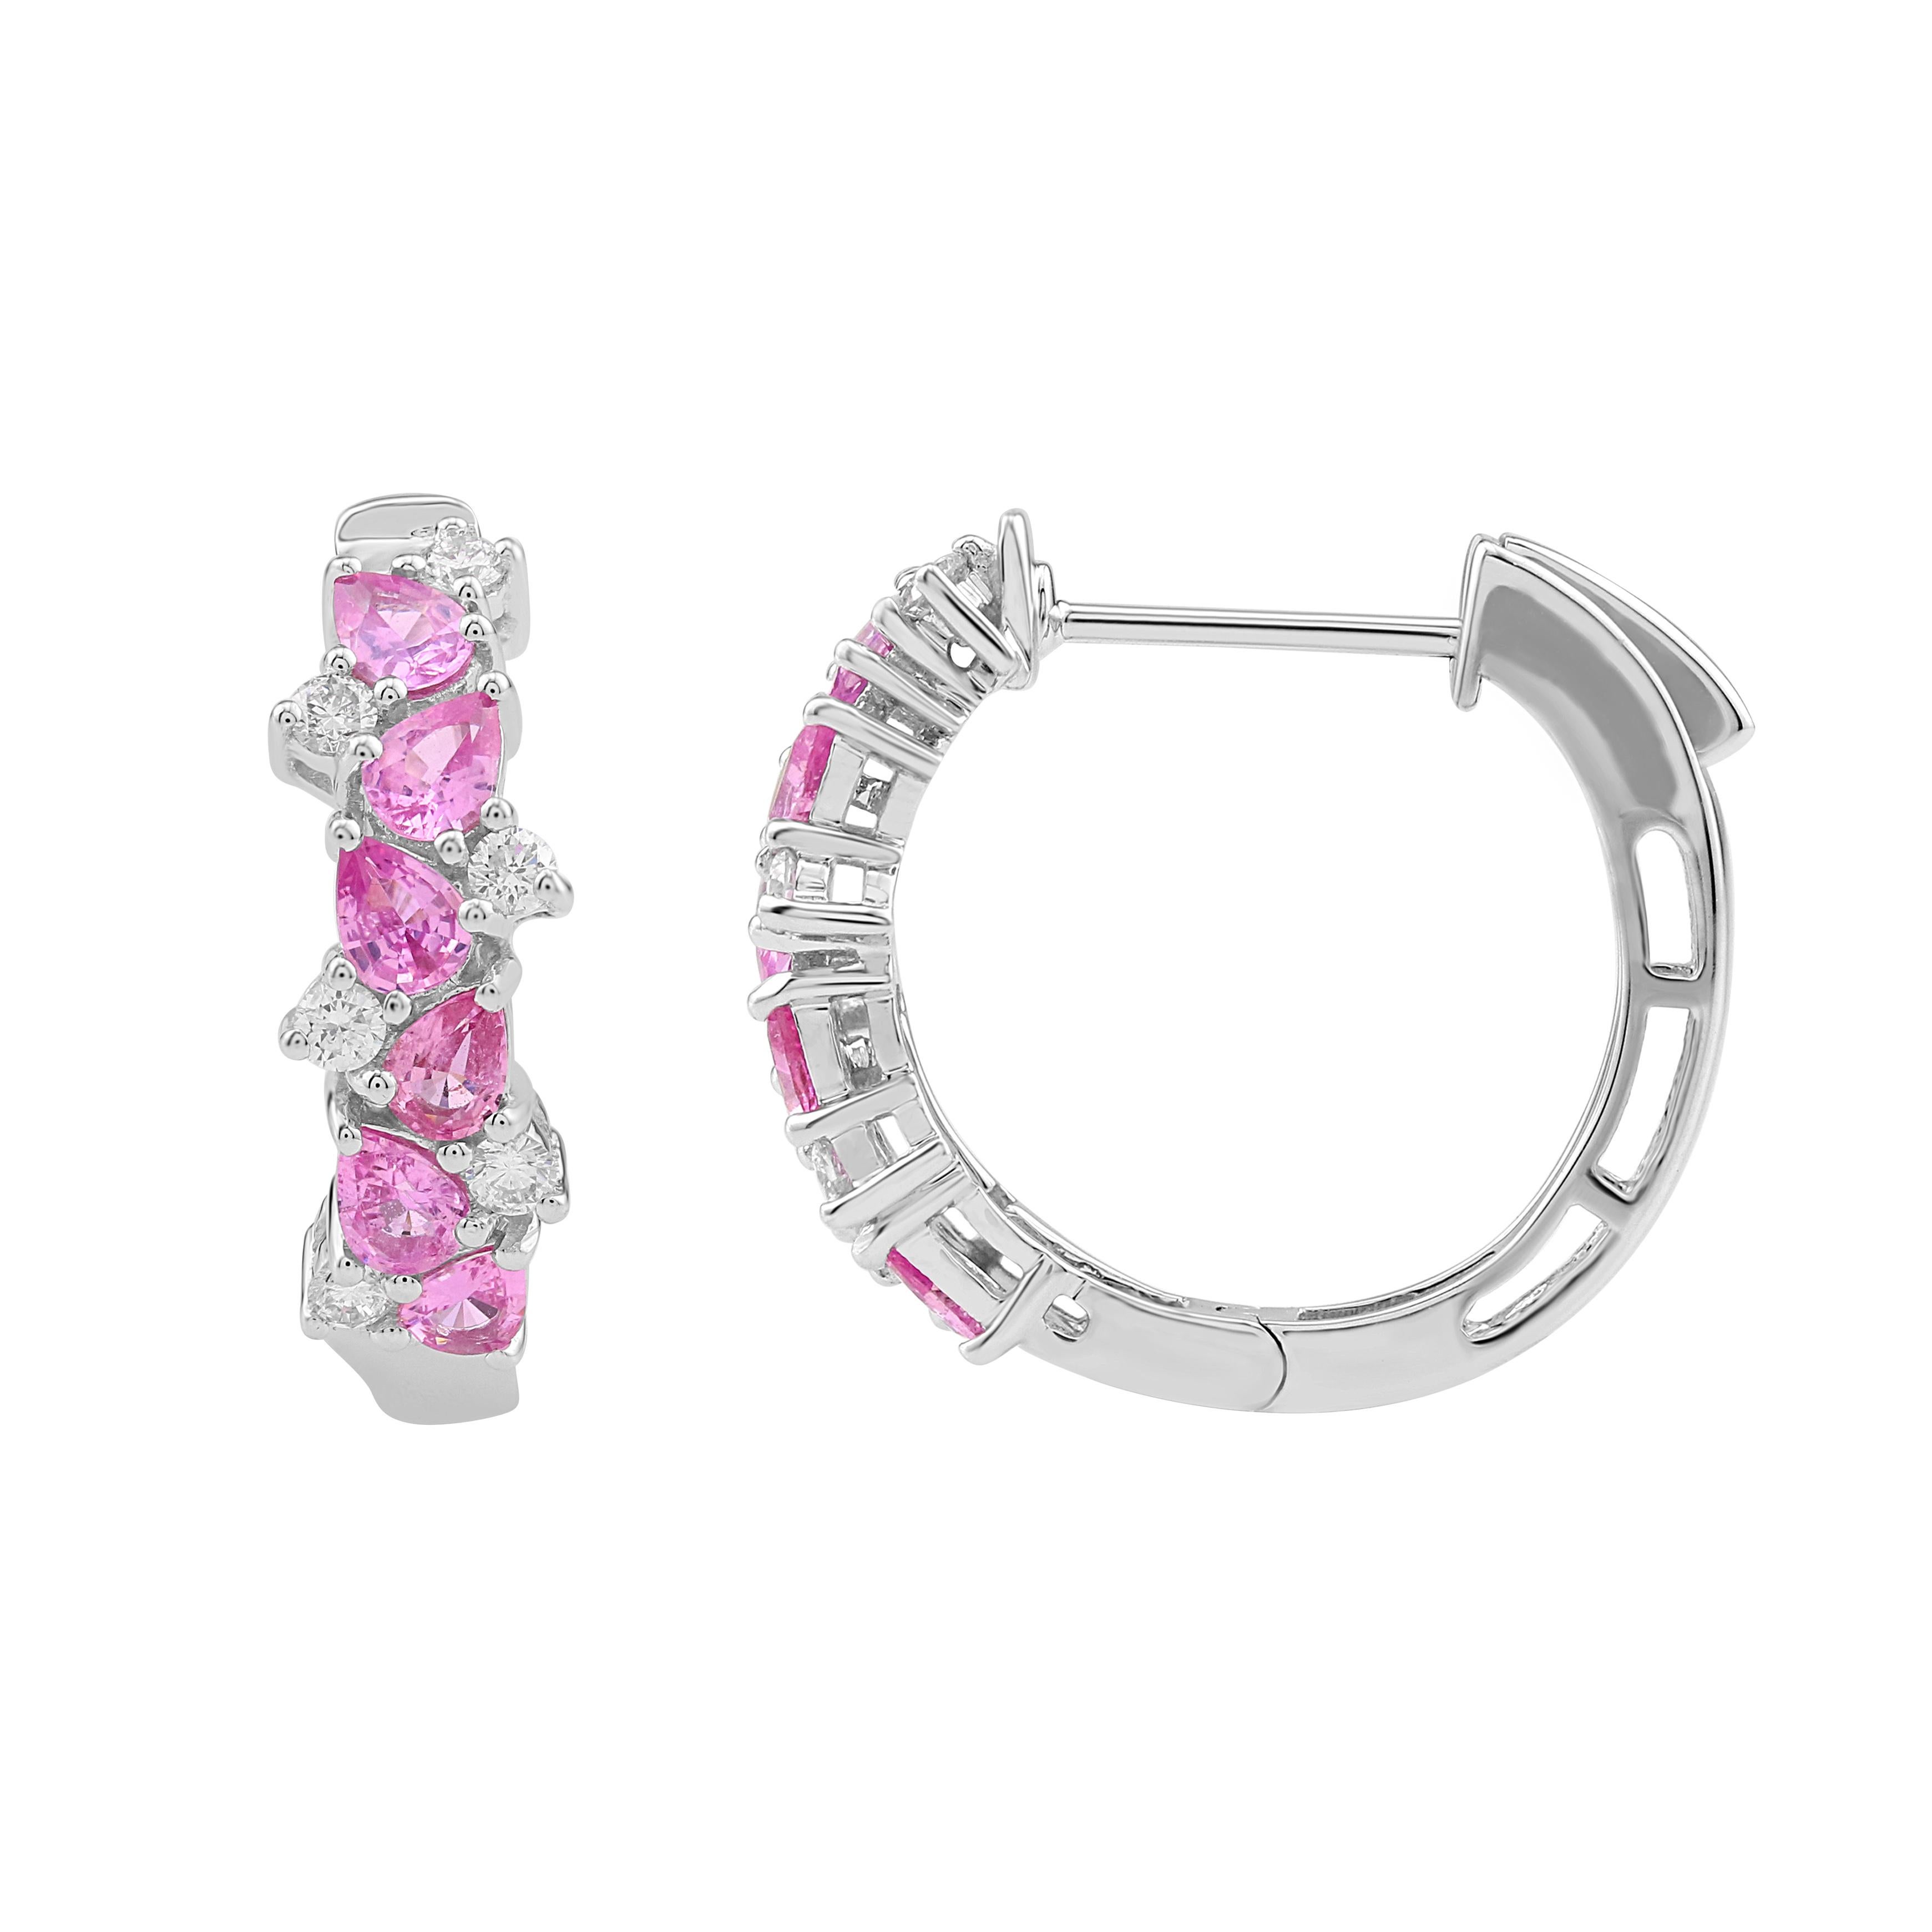 Contemporary Gemistry 14K Gold 1.68 Cttw Pink Sapphire & 0.41 Cttw Diamond Hoop Earrings